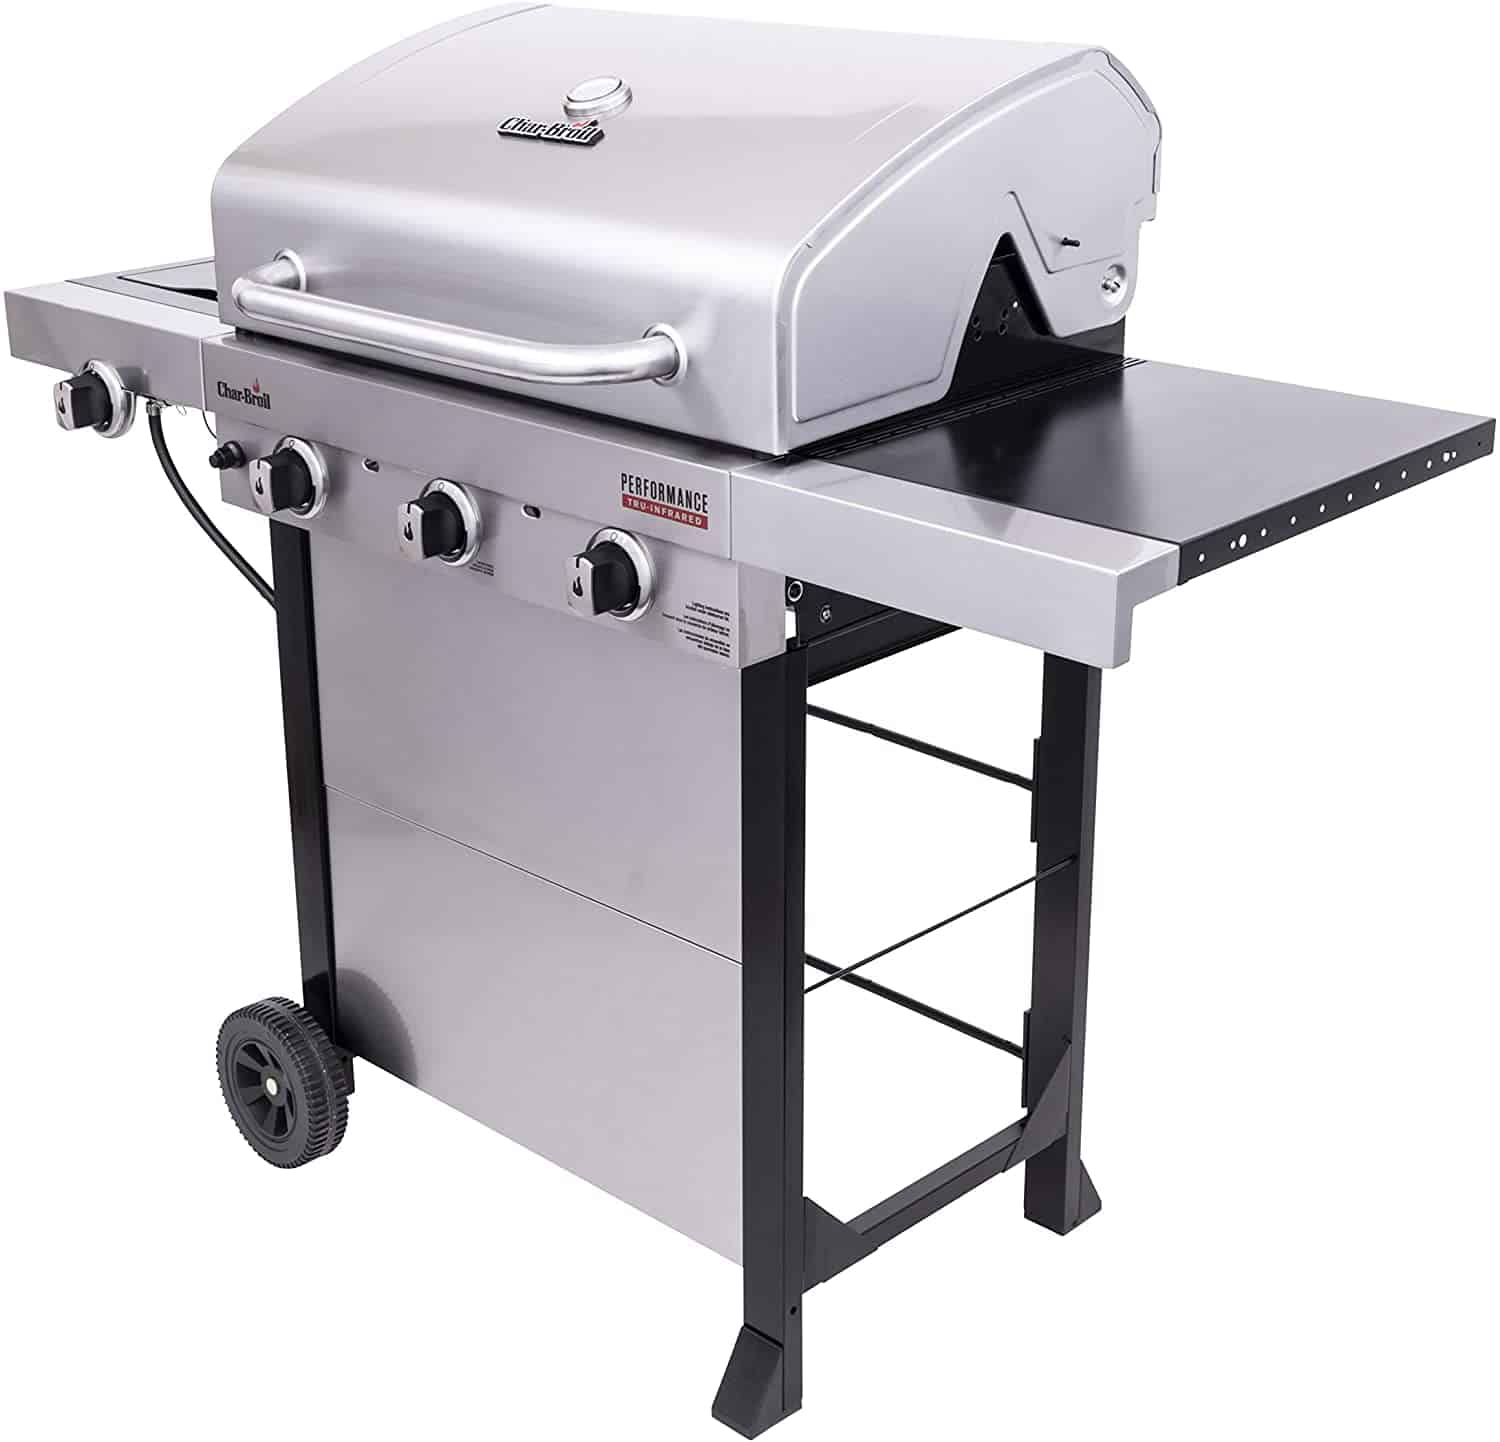 Best large gas grill with side burner under $300- Char-Broil TRU-Infrared 3-Burner Gas Grill